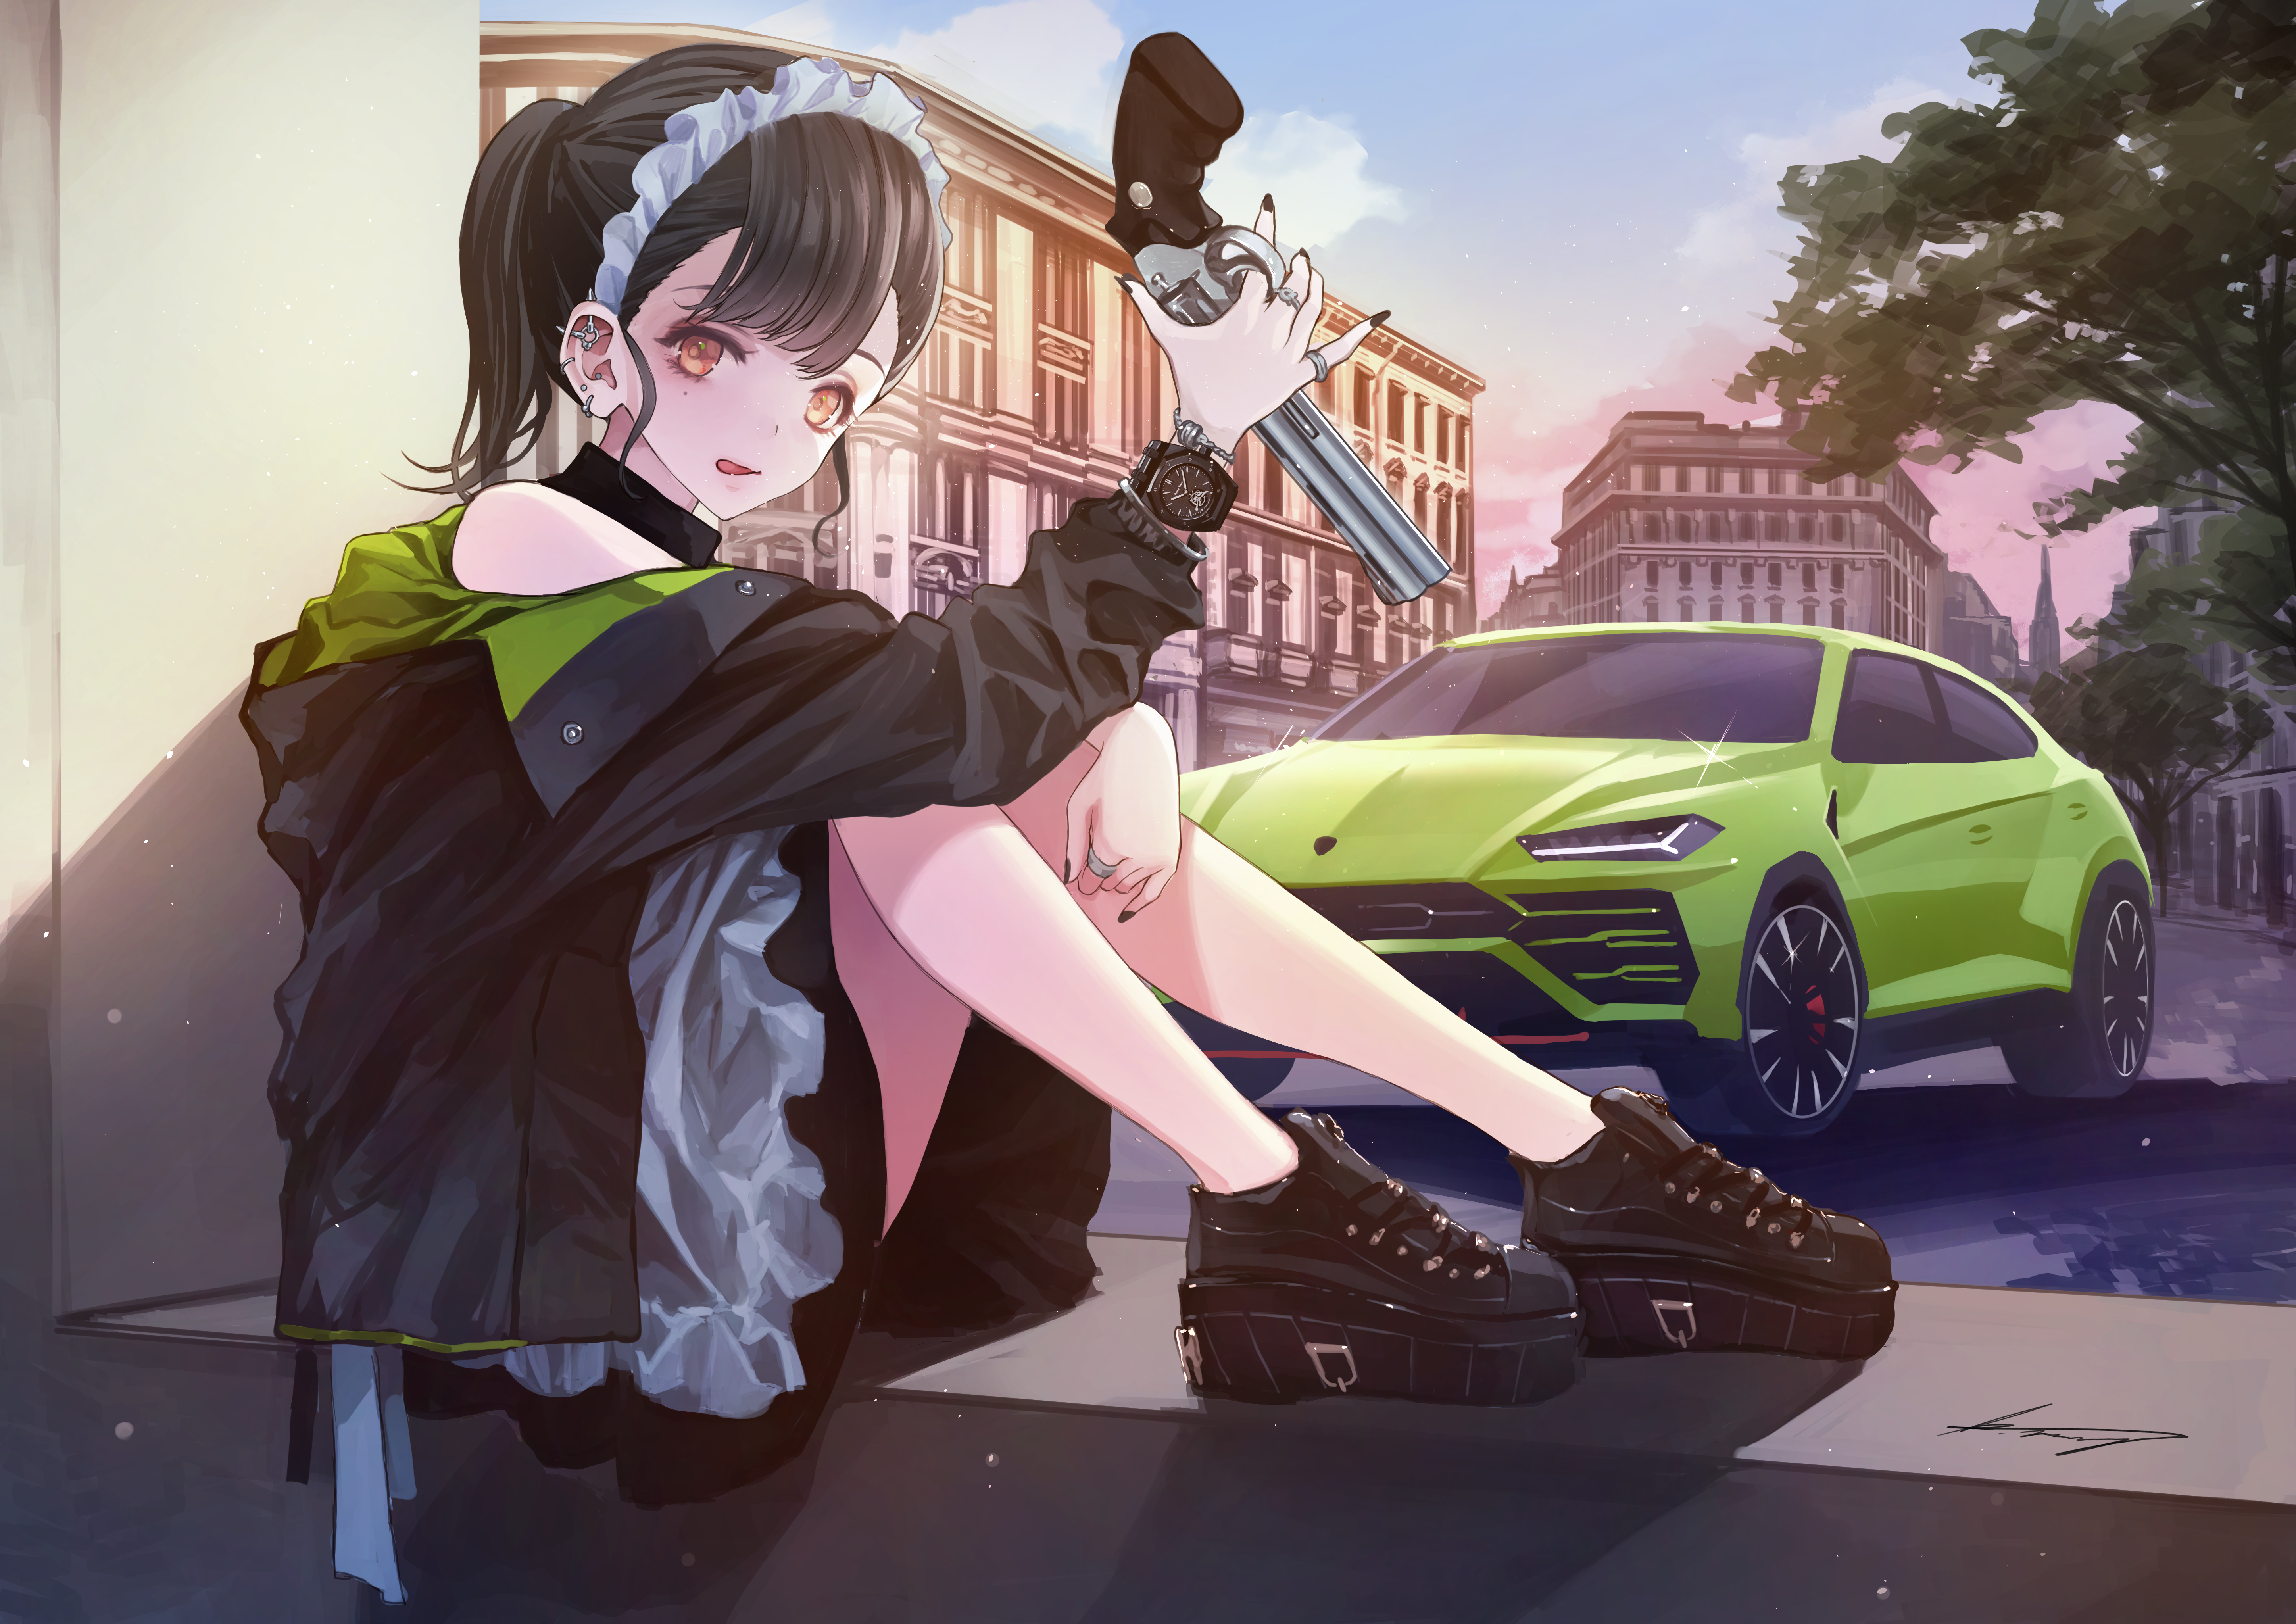 Anime 5787x4093 anime anime girls digital art artwork 2D portrait car Lamborghini Urus gun black hair ponytail brown eyes licking lips maid outfit holding knees koh Lamborghini